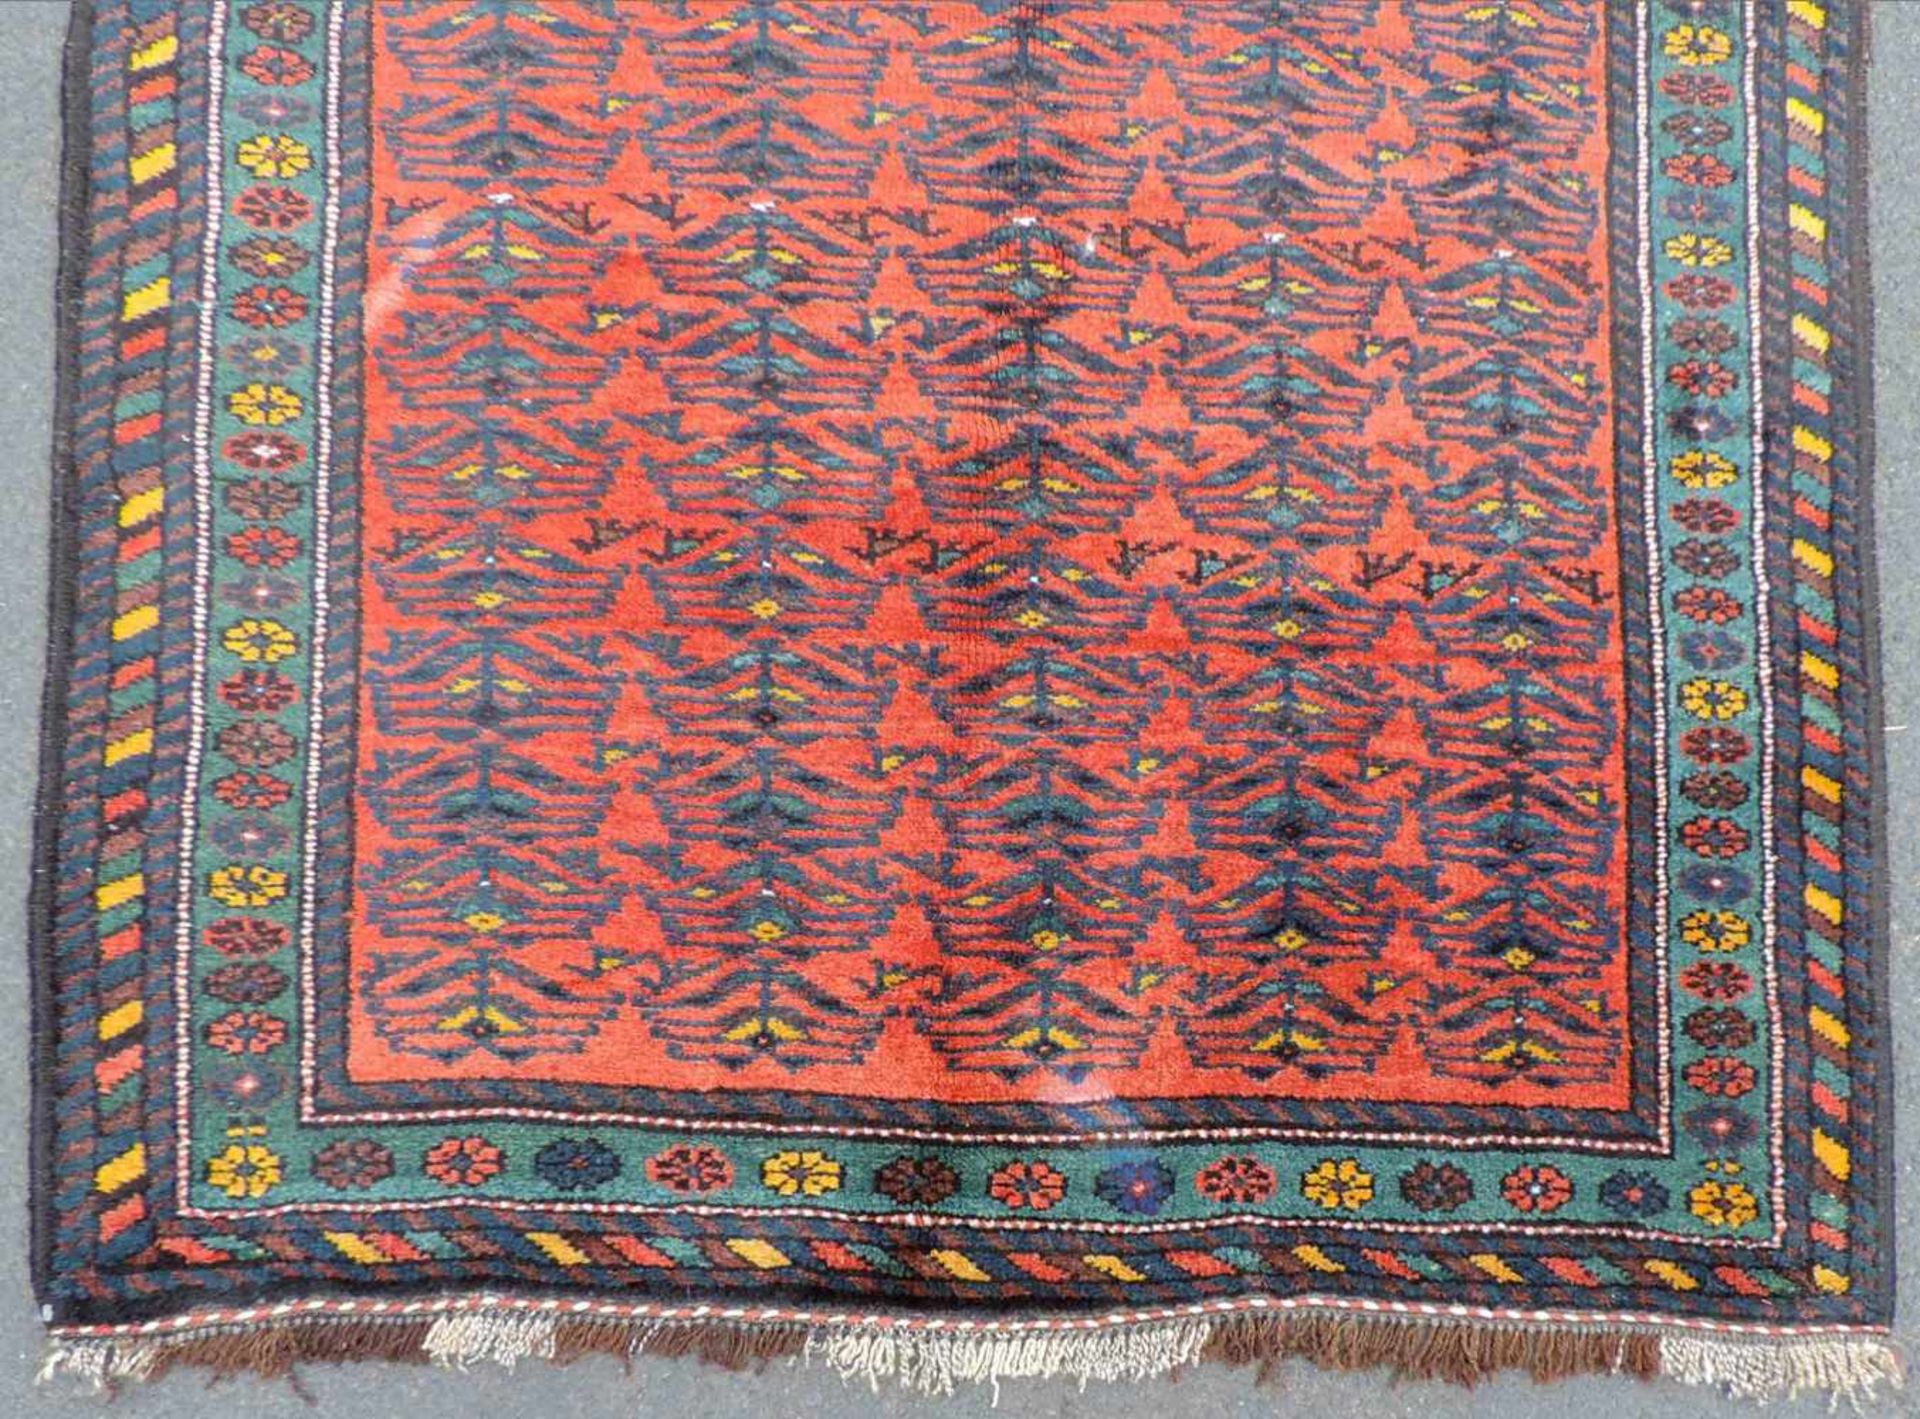 Kurdish Persian carpet. Iran. Antique, around 1910. - Image 2 of 5